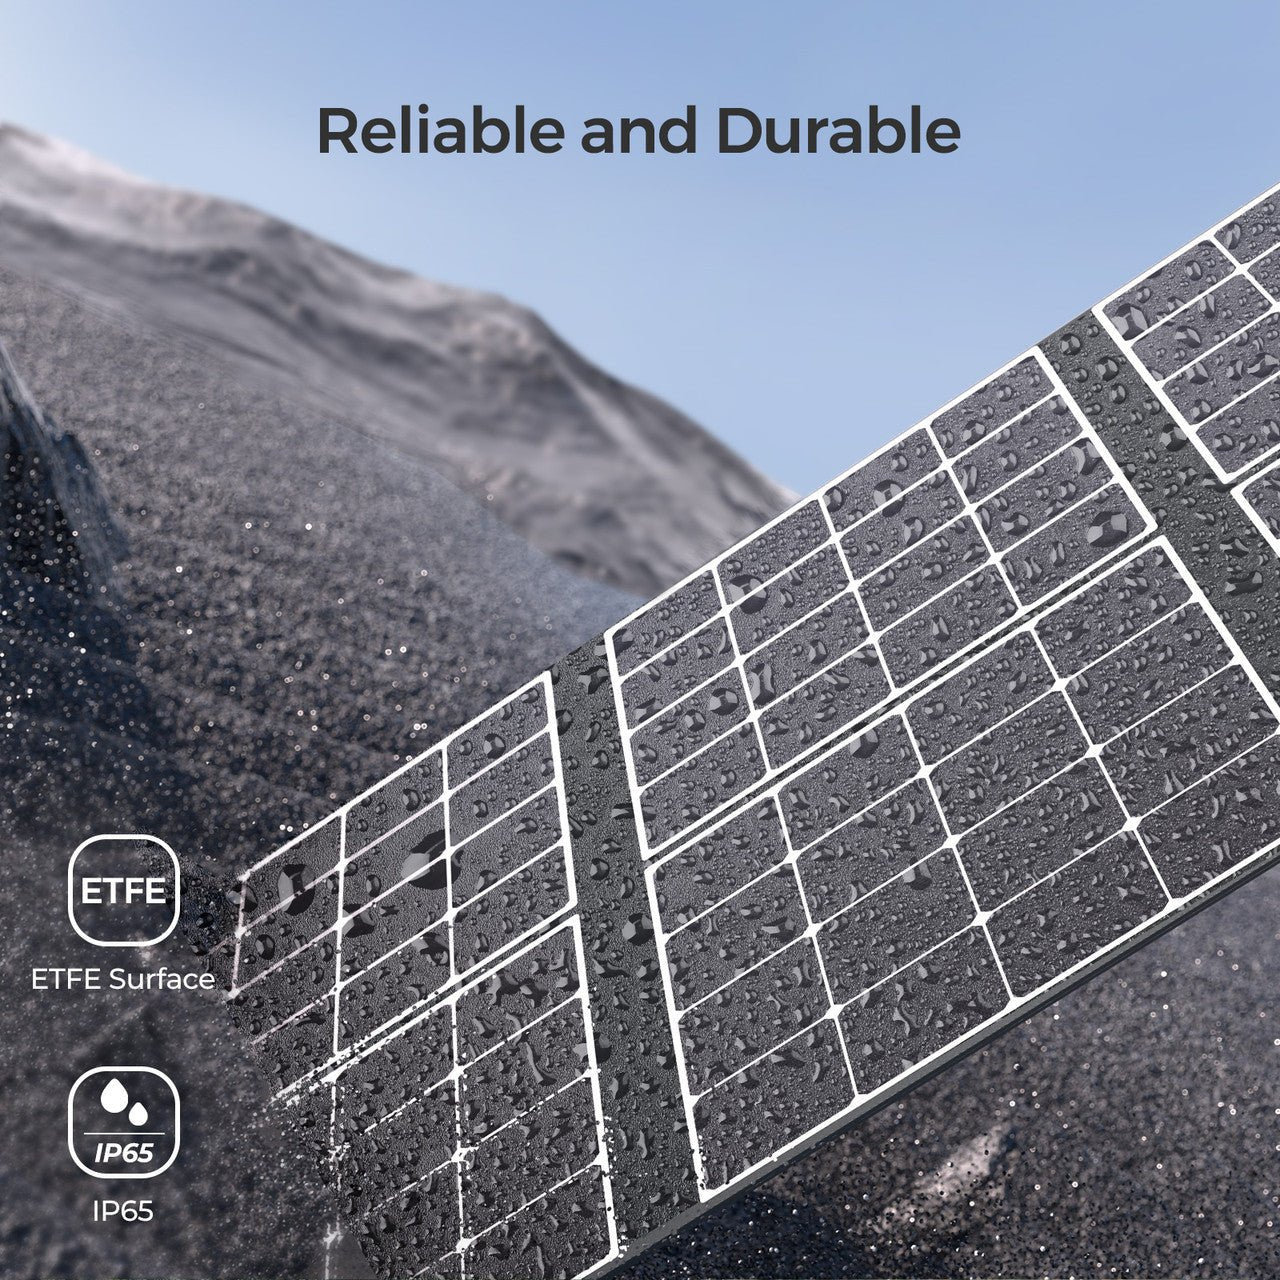 Renogy 400W Portable Solar Panel Foldable Monocrystalline Solar Blanket - Solar Generators and Power Stations Plus